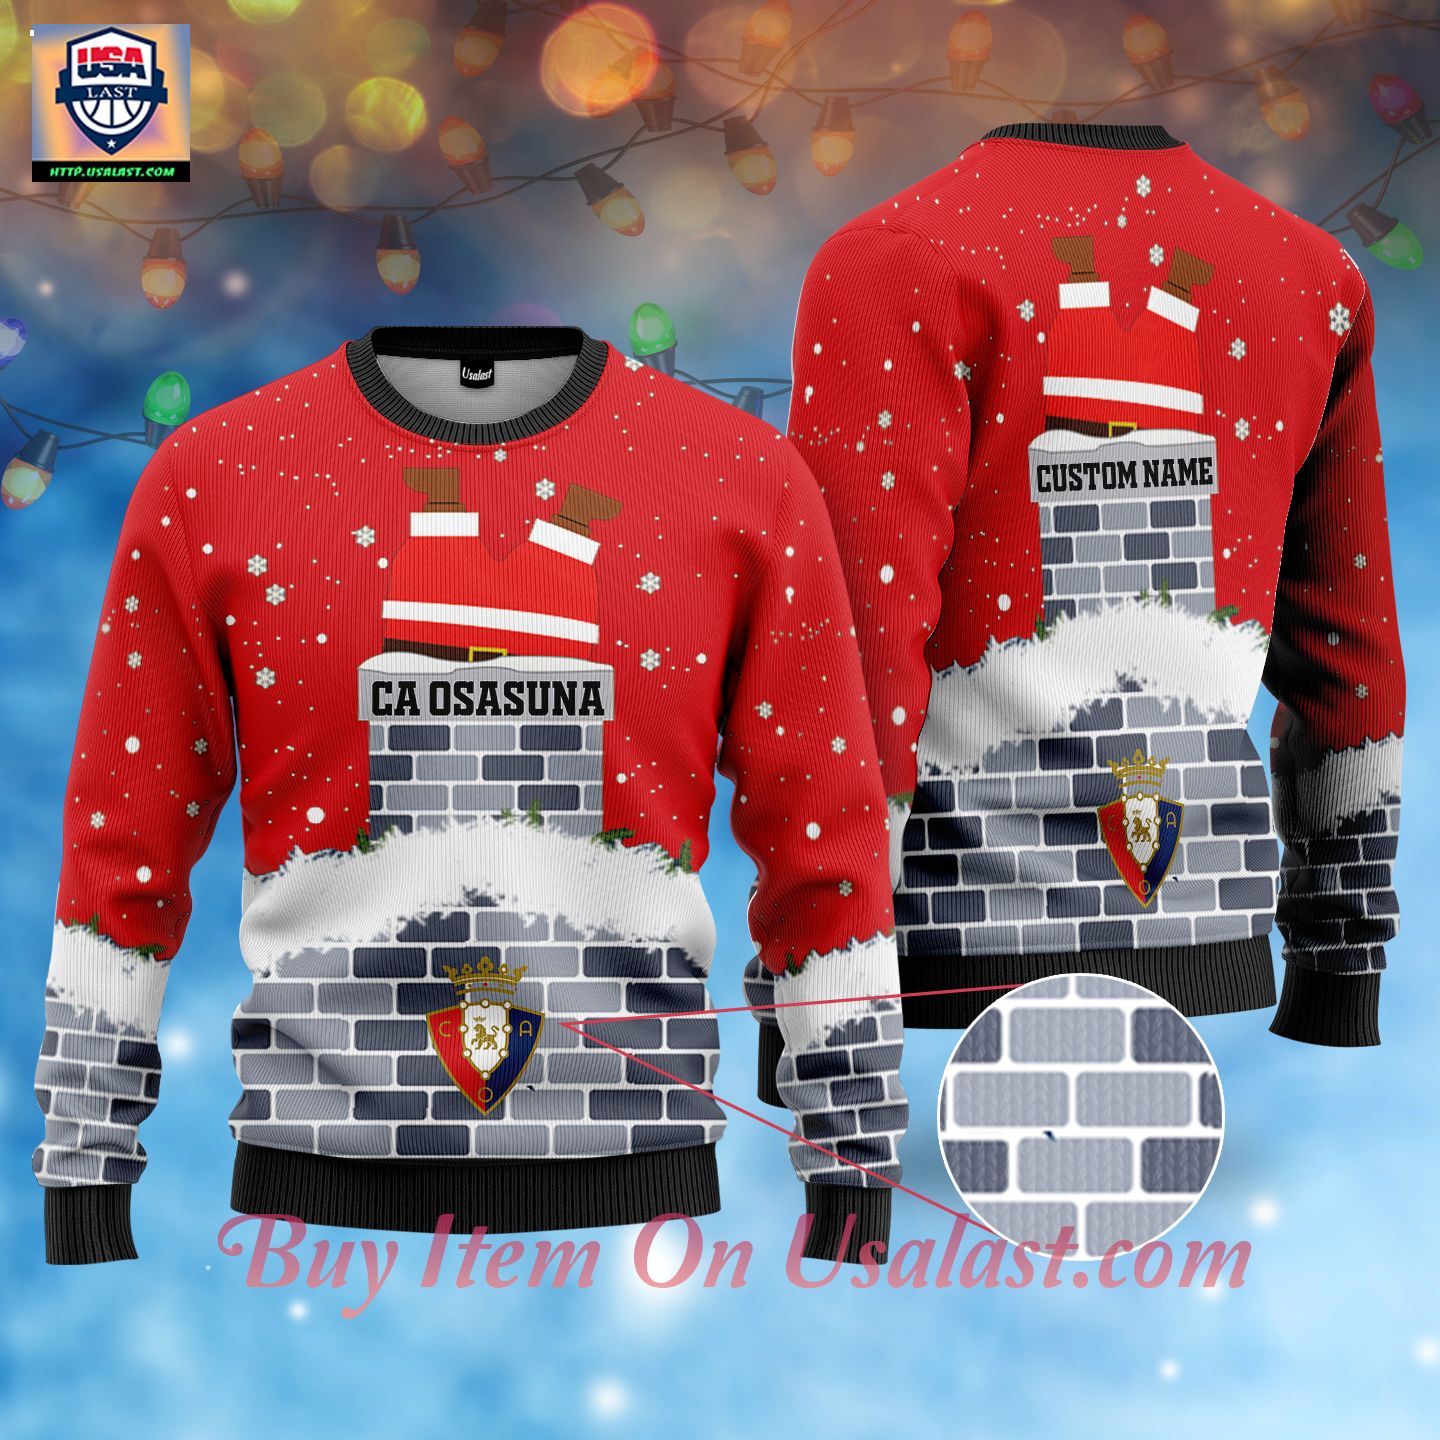 CA Osasuna Santa Claus Custom Name Ugly Christmas Sweater - Super sober